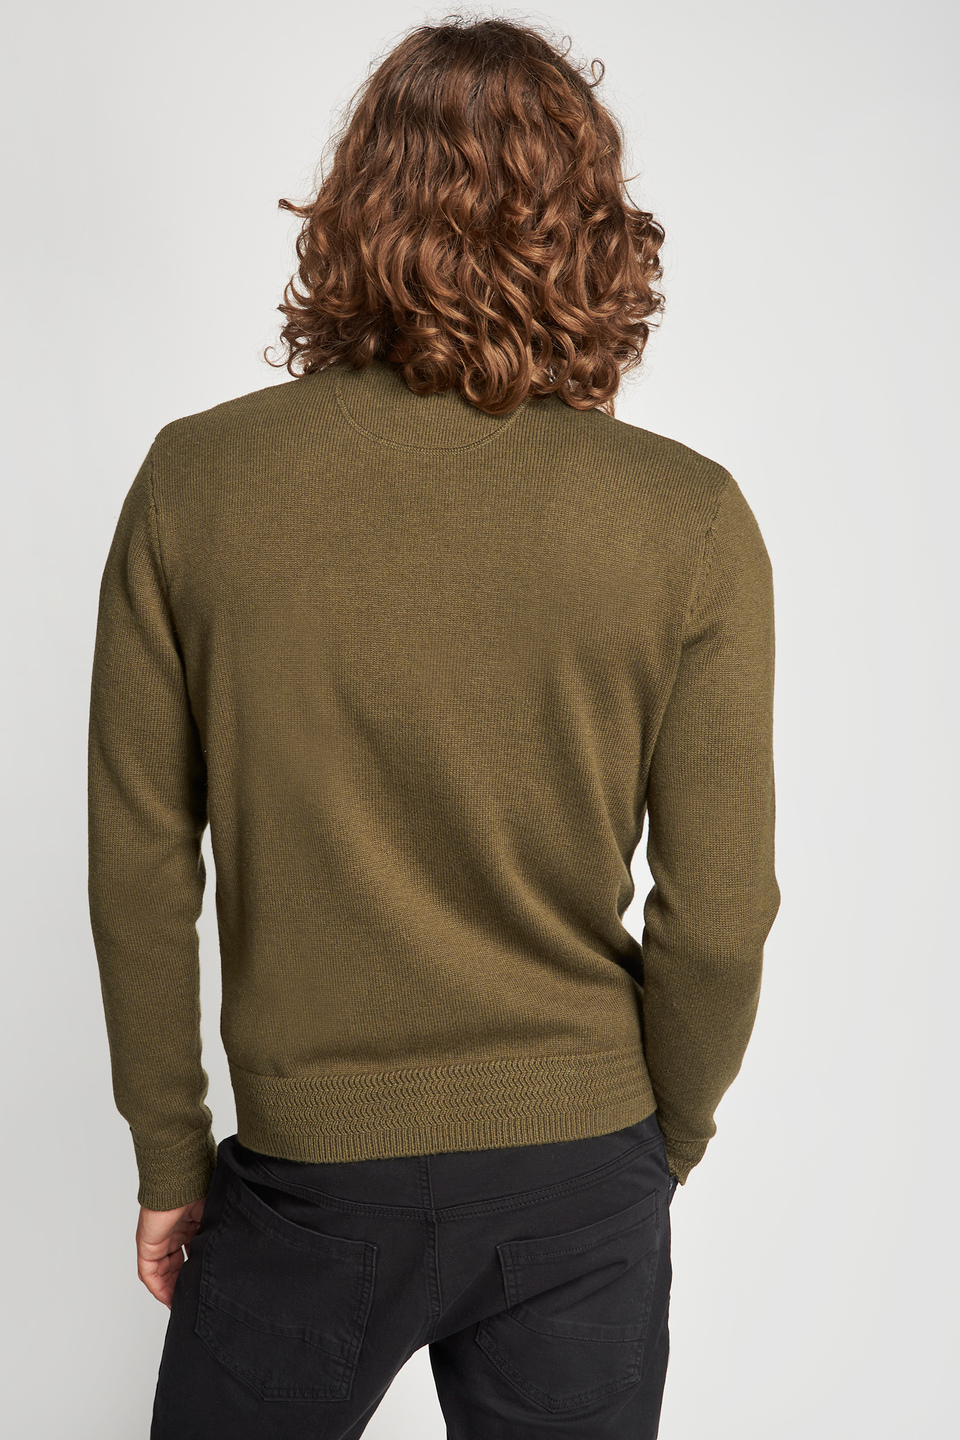 Men's wool-blend sweater | La Martina - Official Online Shop